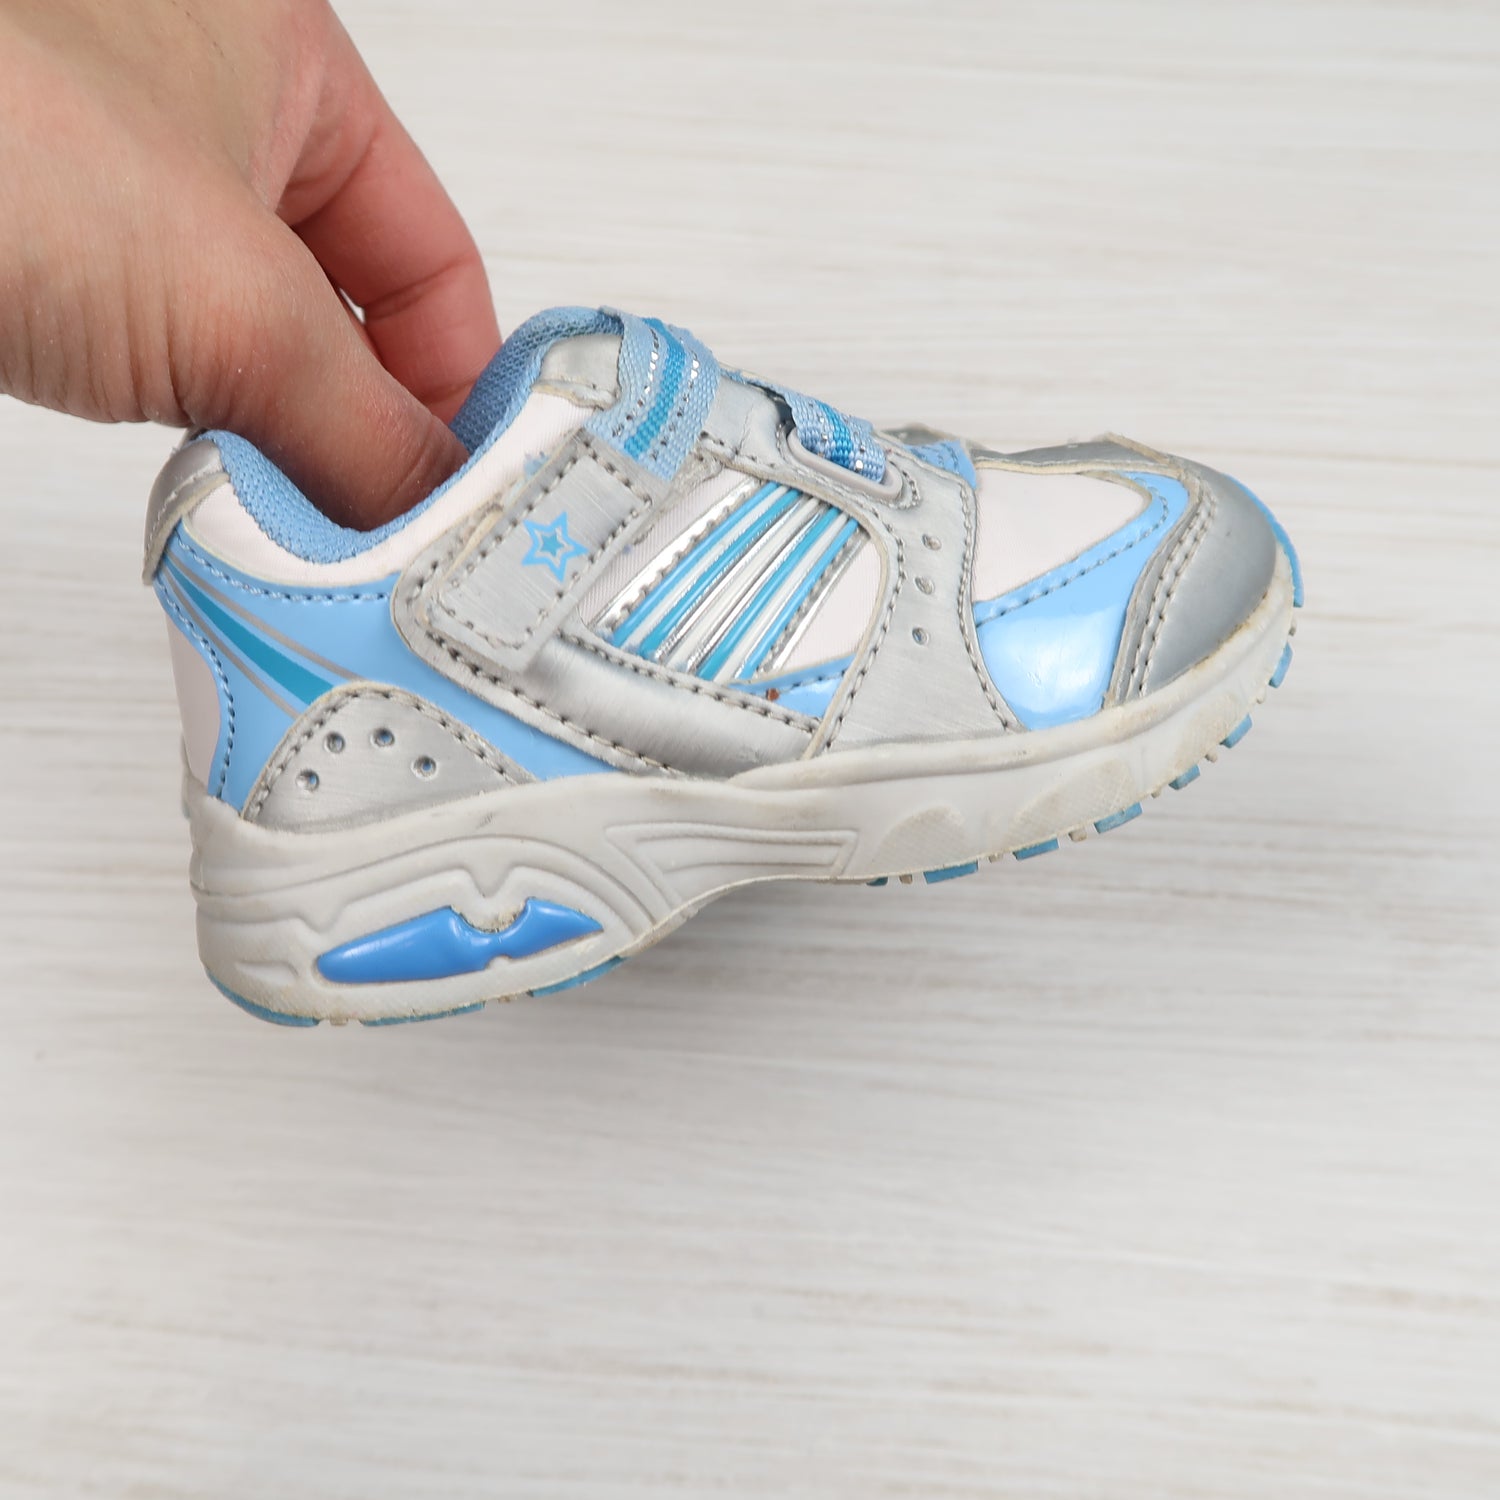 Sportek - Shoes (5)